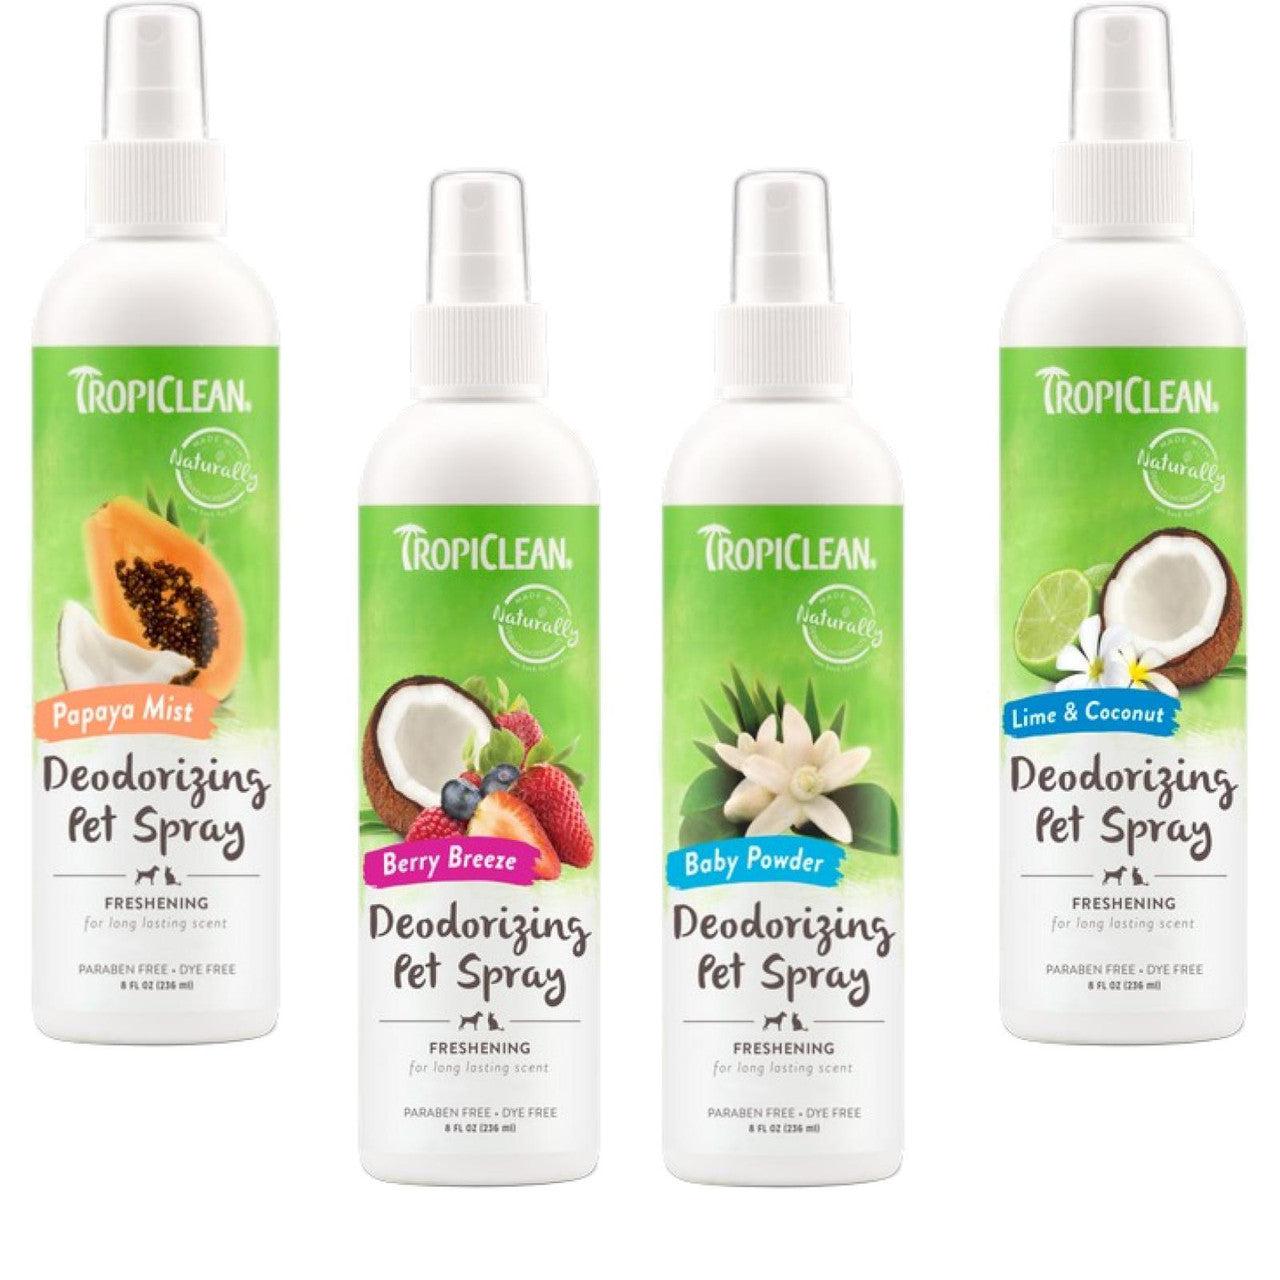 Berry Breeze Deodorizing Pet Spray - Tropiclean